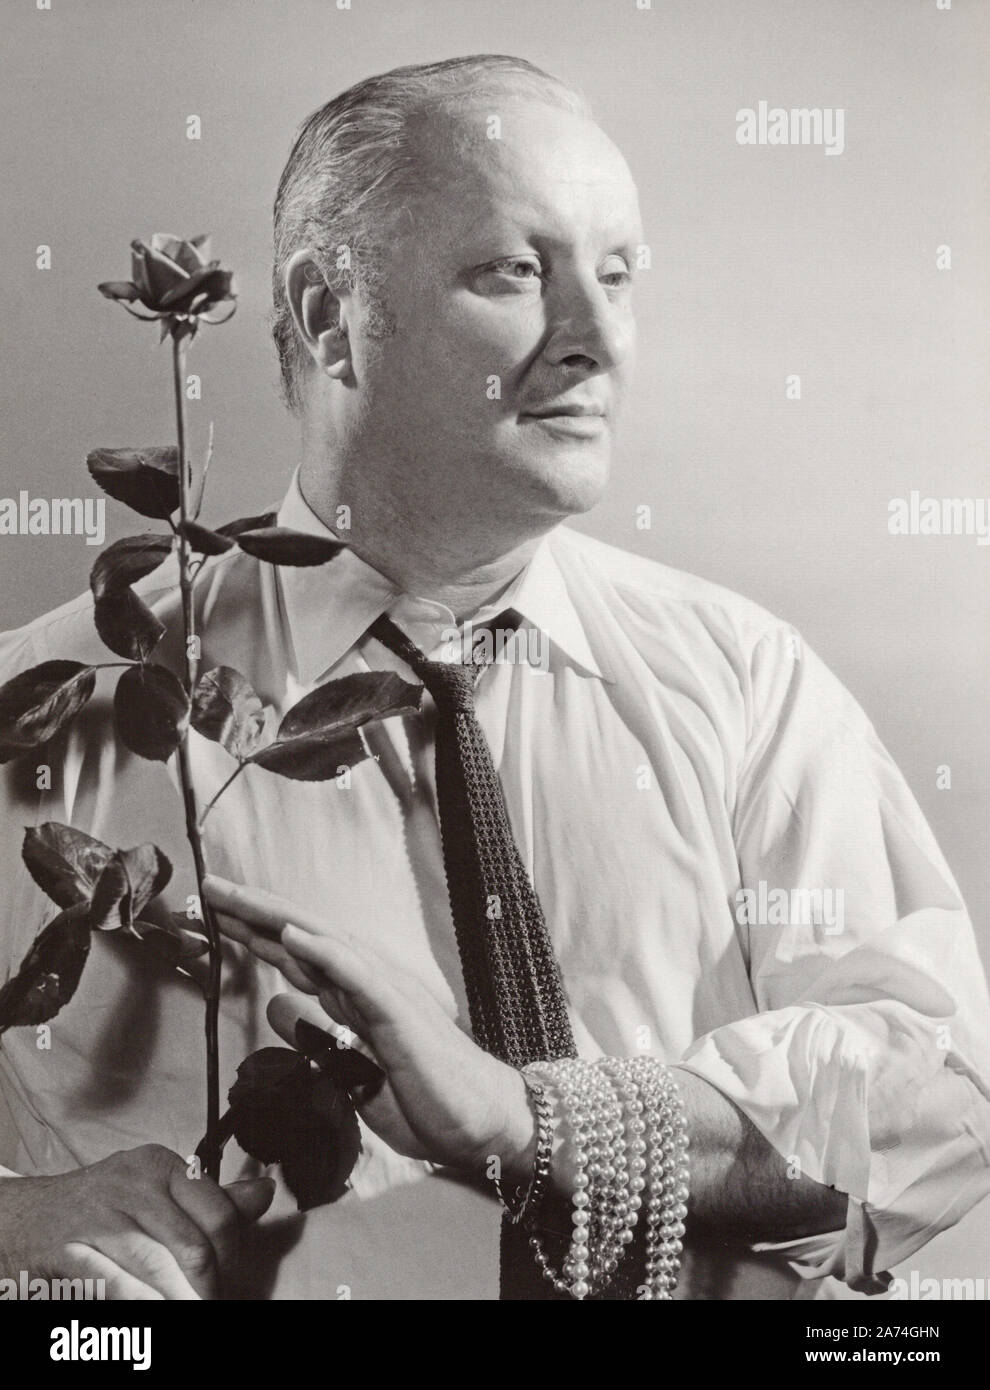 Marcel Andre, französischer Schauspieler, Deutschland ca. 1954. French actor Marcel Andre, Germany ca. 1954. Stock Photo